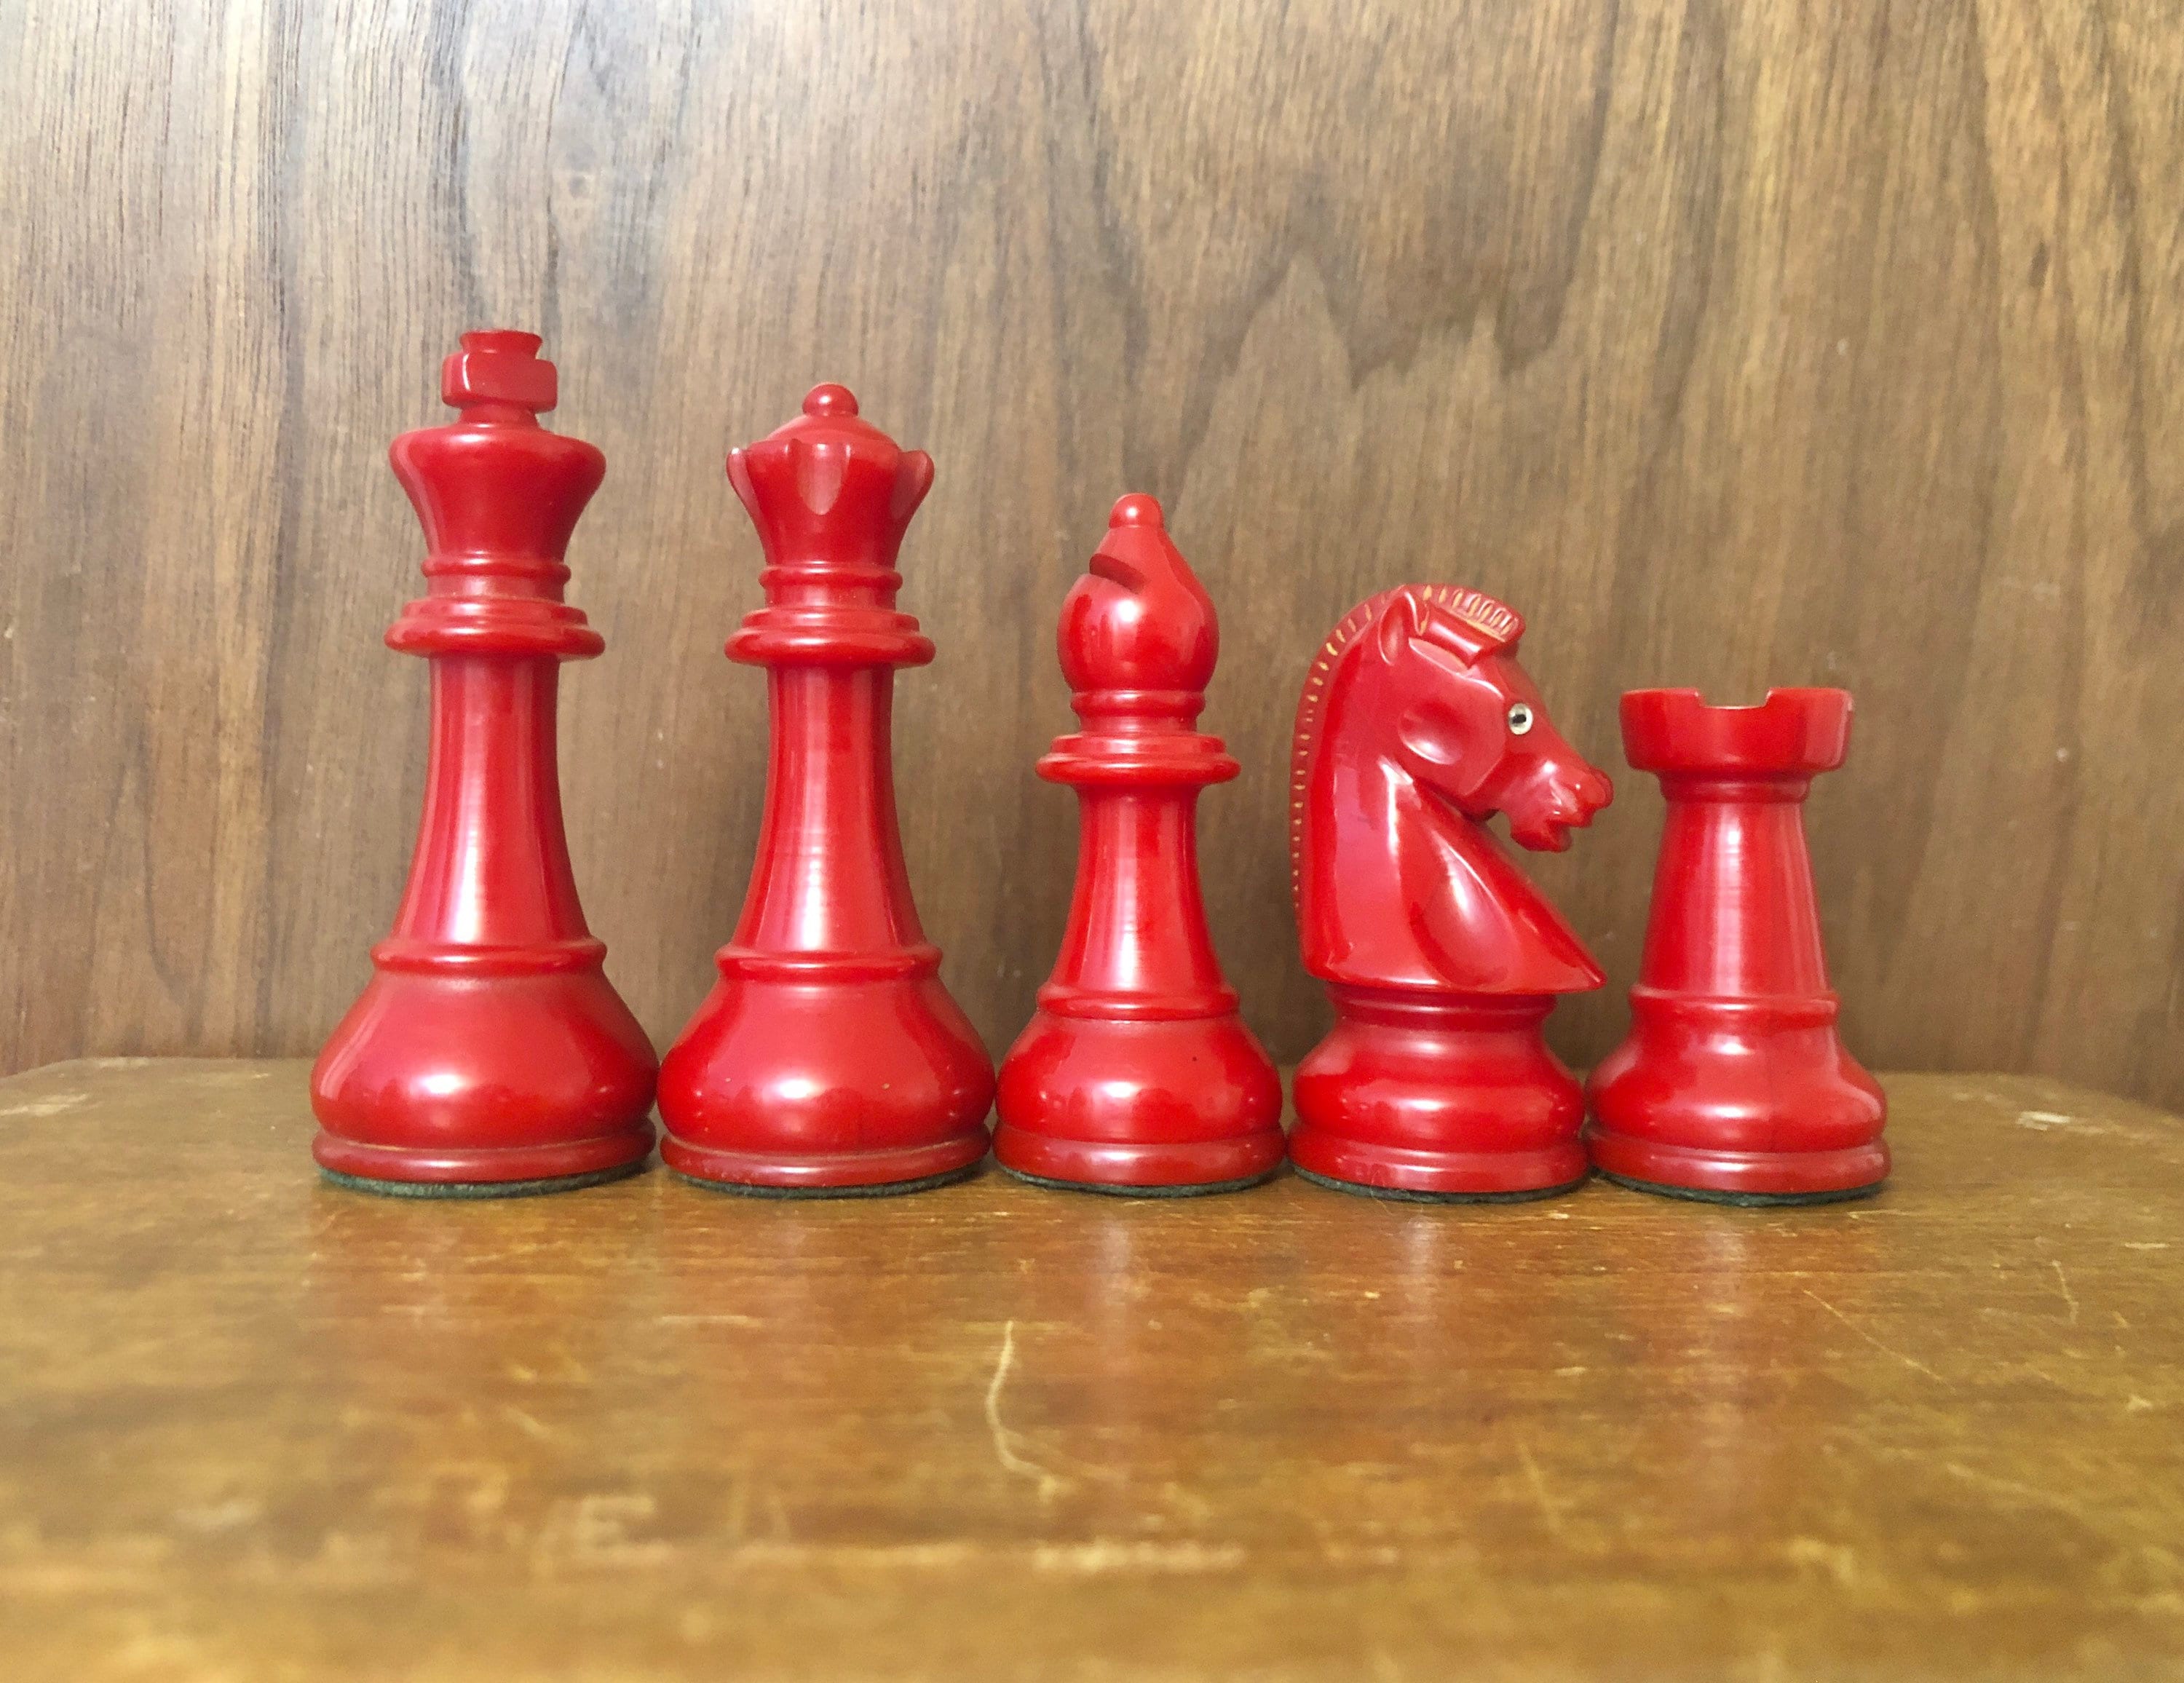 16 Stained Beech Staunton Analysis Chess Set with Storage Box